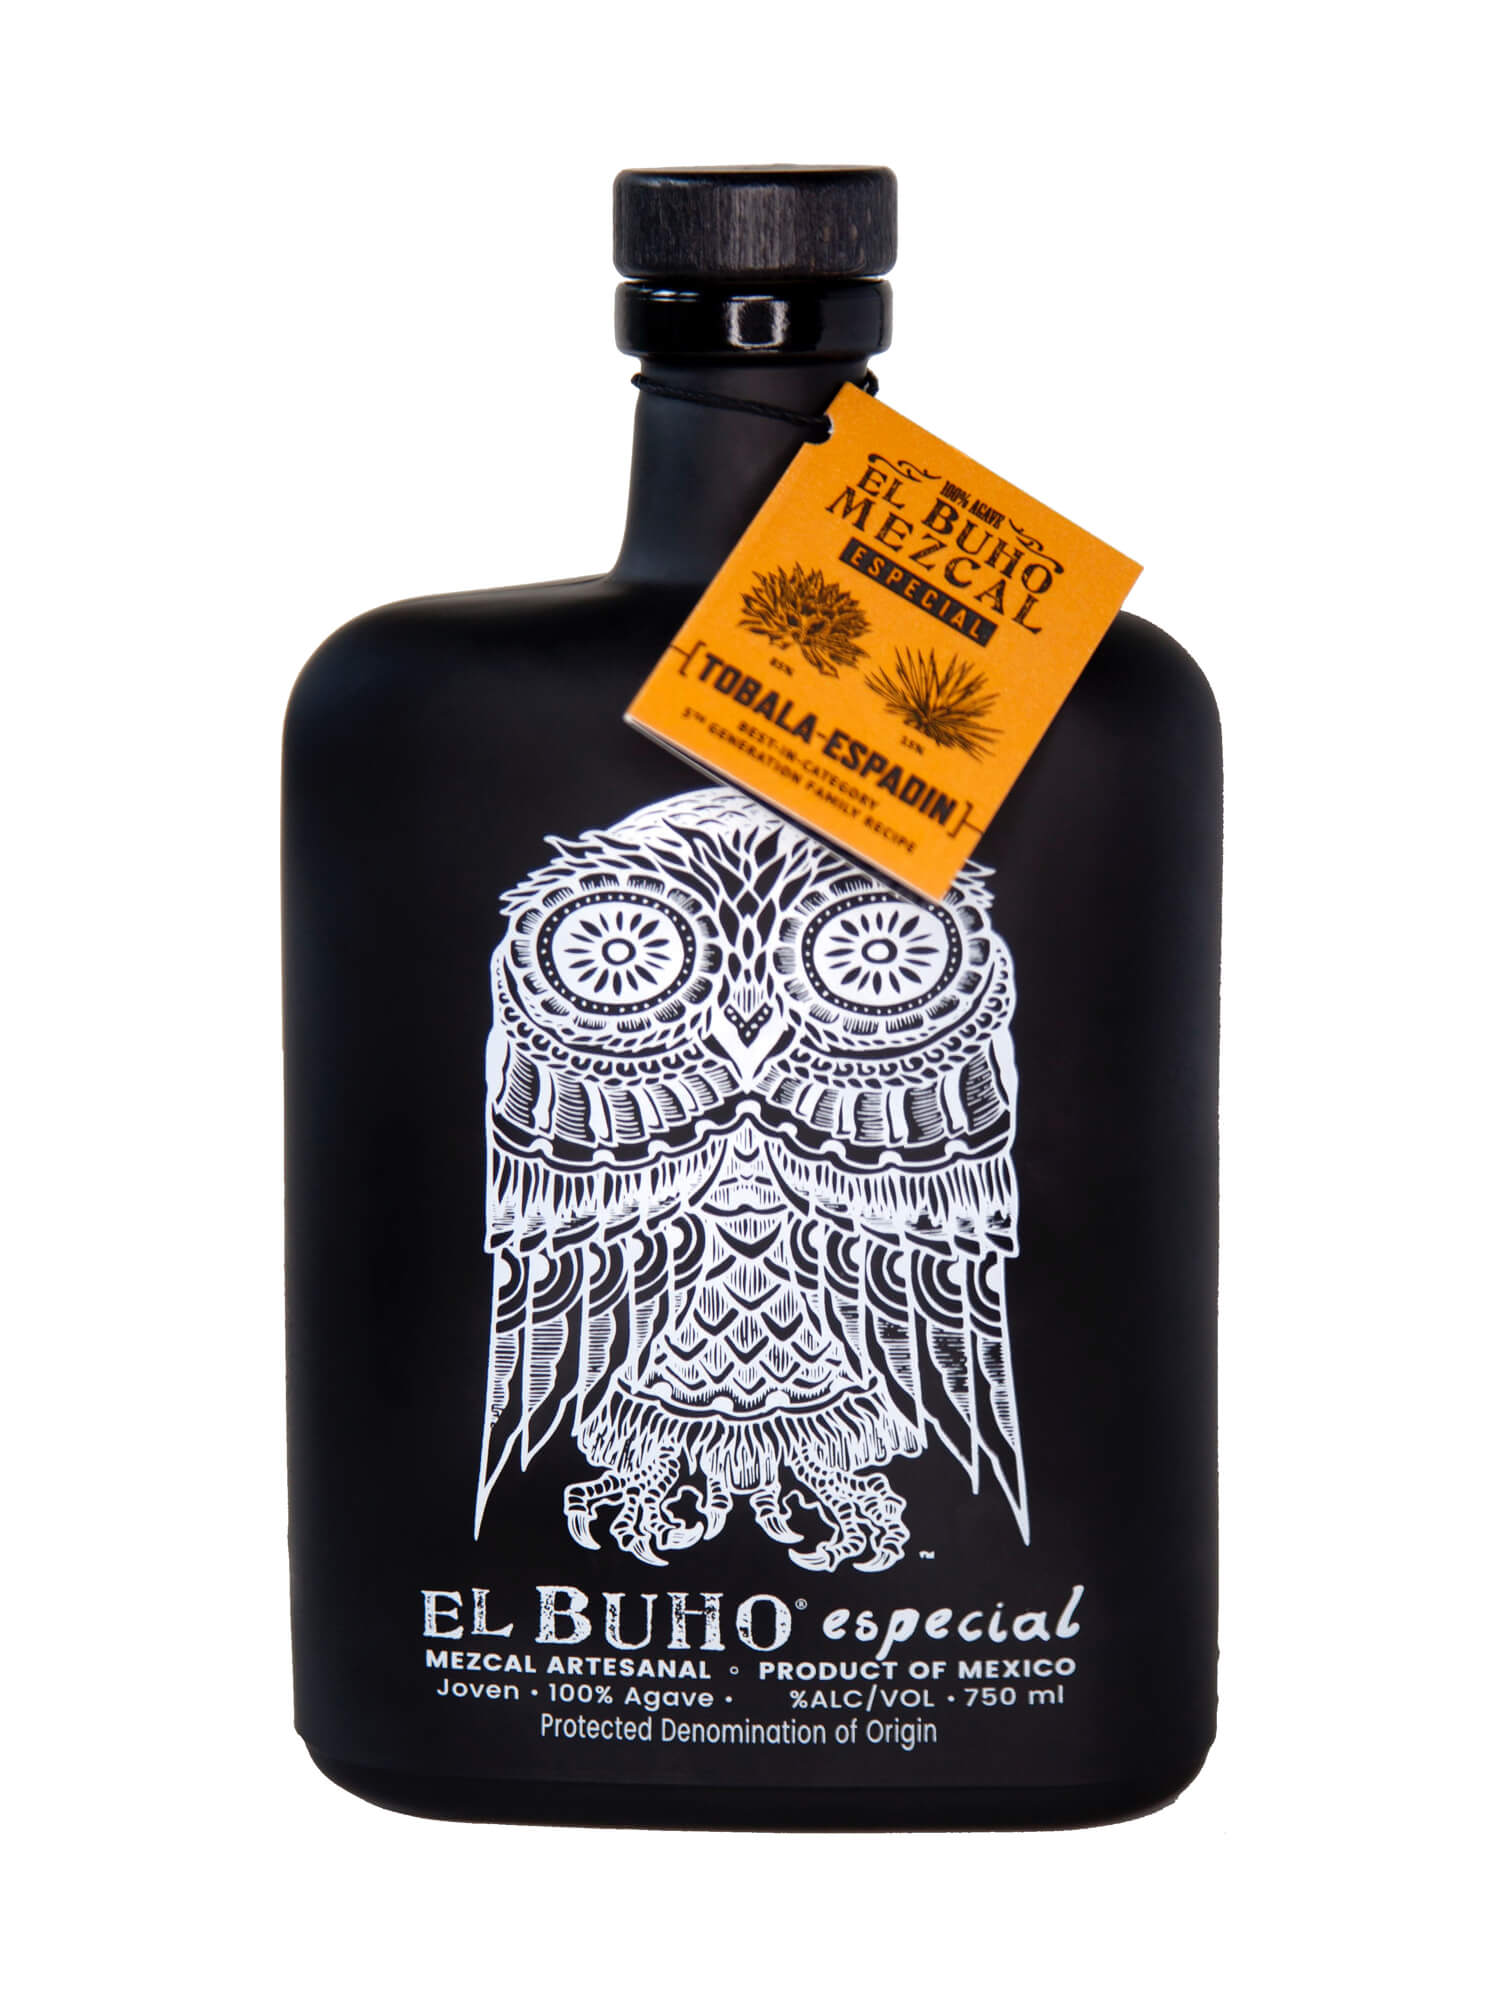 El Buho Tobala-Espadin Mezcal bottle